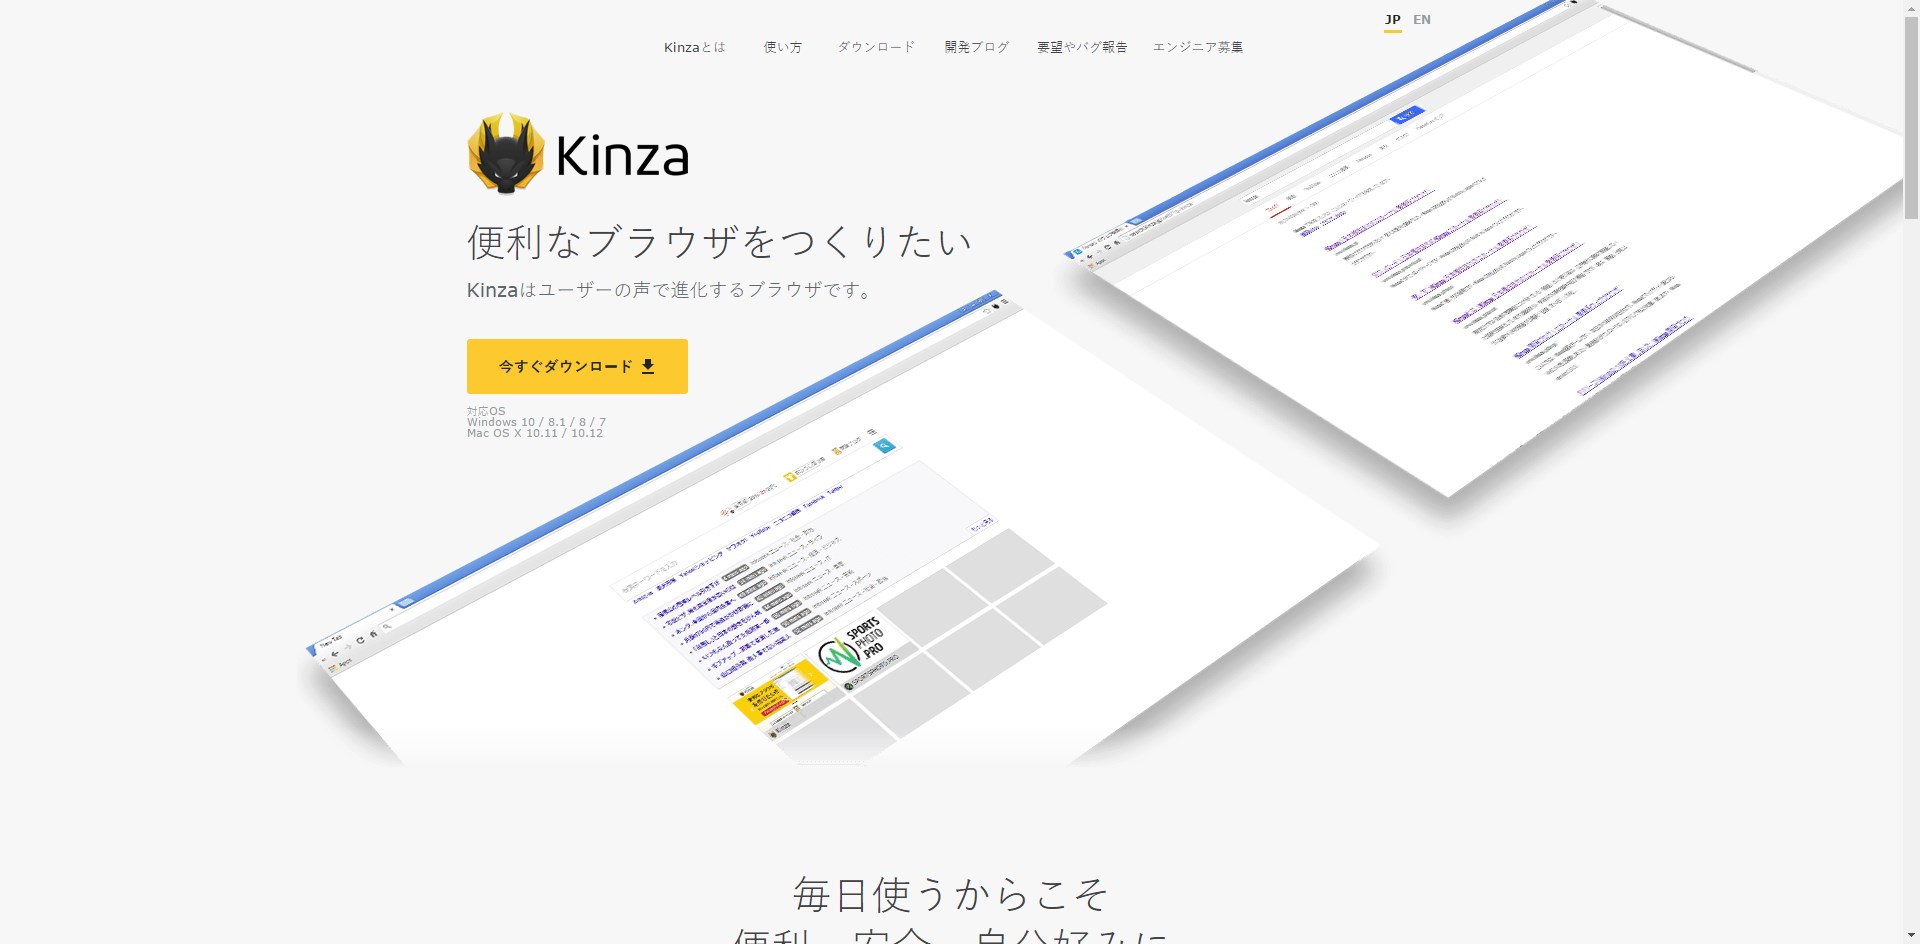 「Kinza」ダウンロードページ